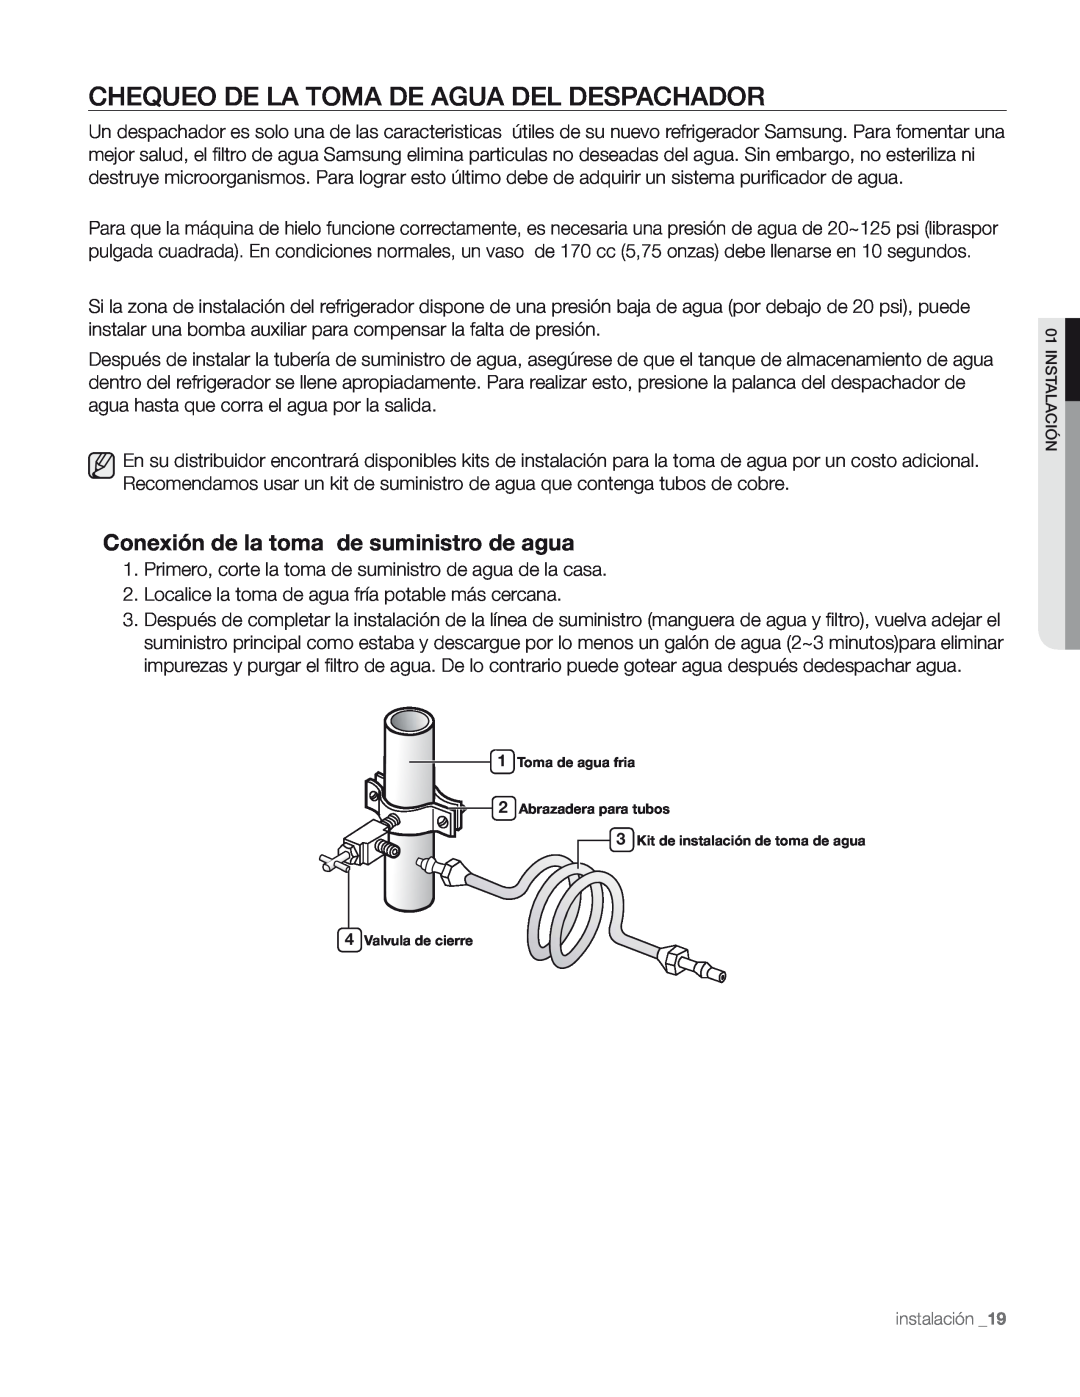 Samsung DA68-01890M user manual Chequeo De La Toma De Agua Del Despachador, Conexión de la toma de suministro de agua 